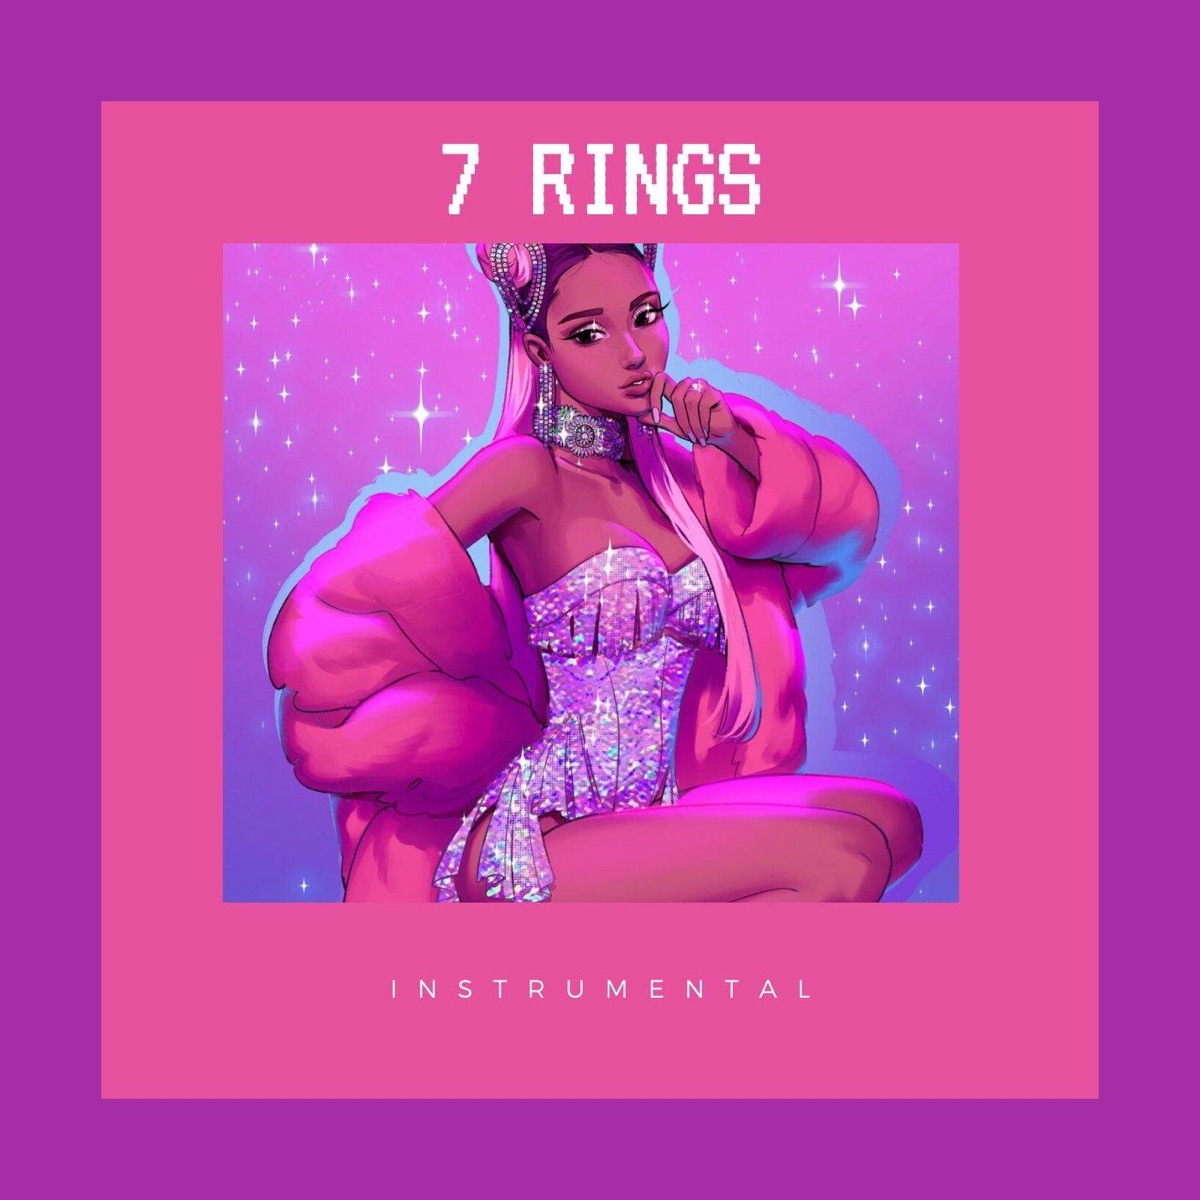 7 Rings (Instrumental) - Single by Dyla Digital on Apple Music